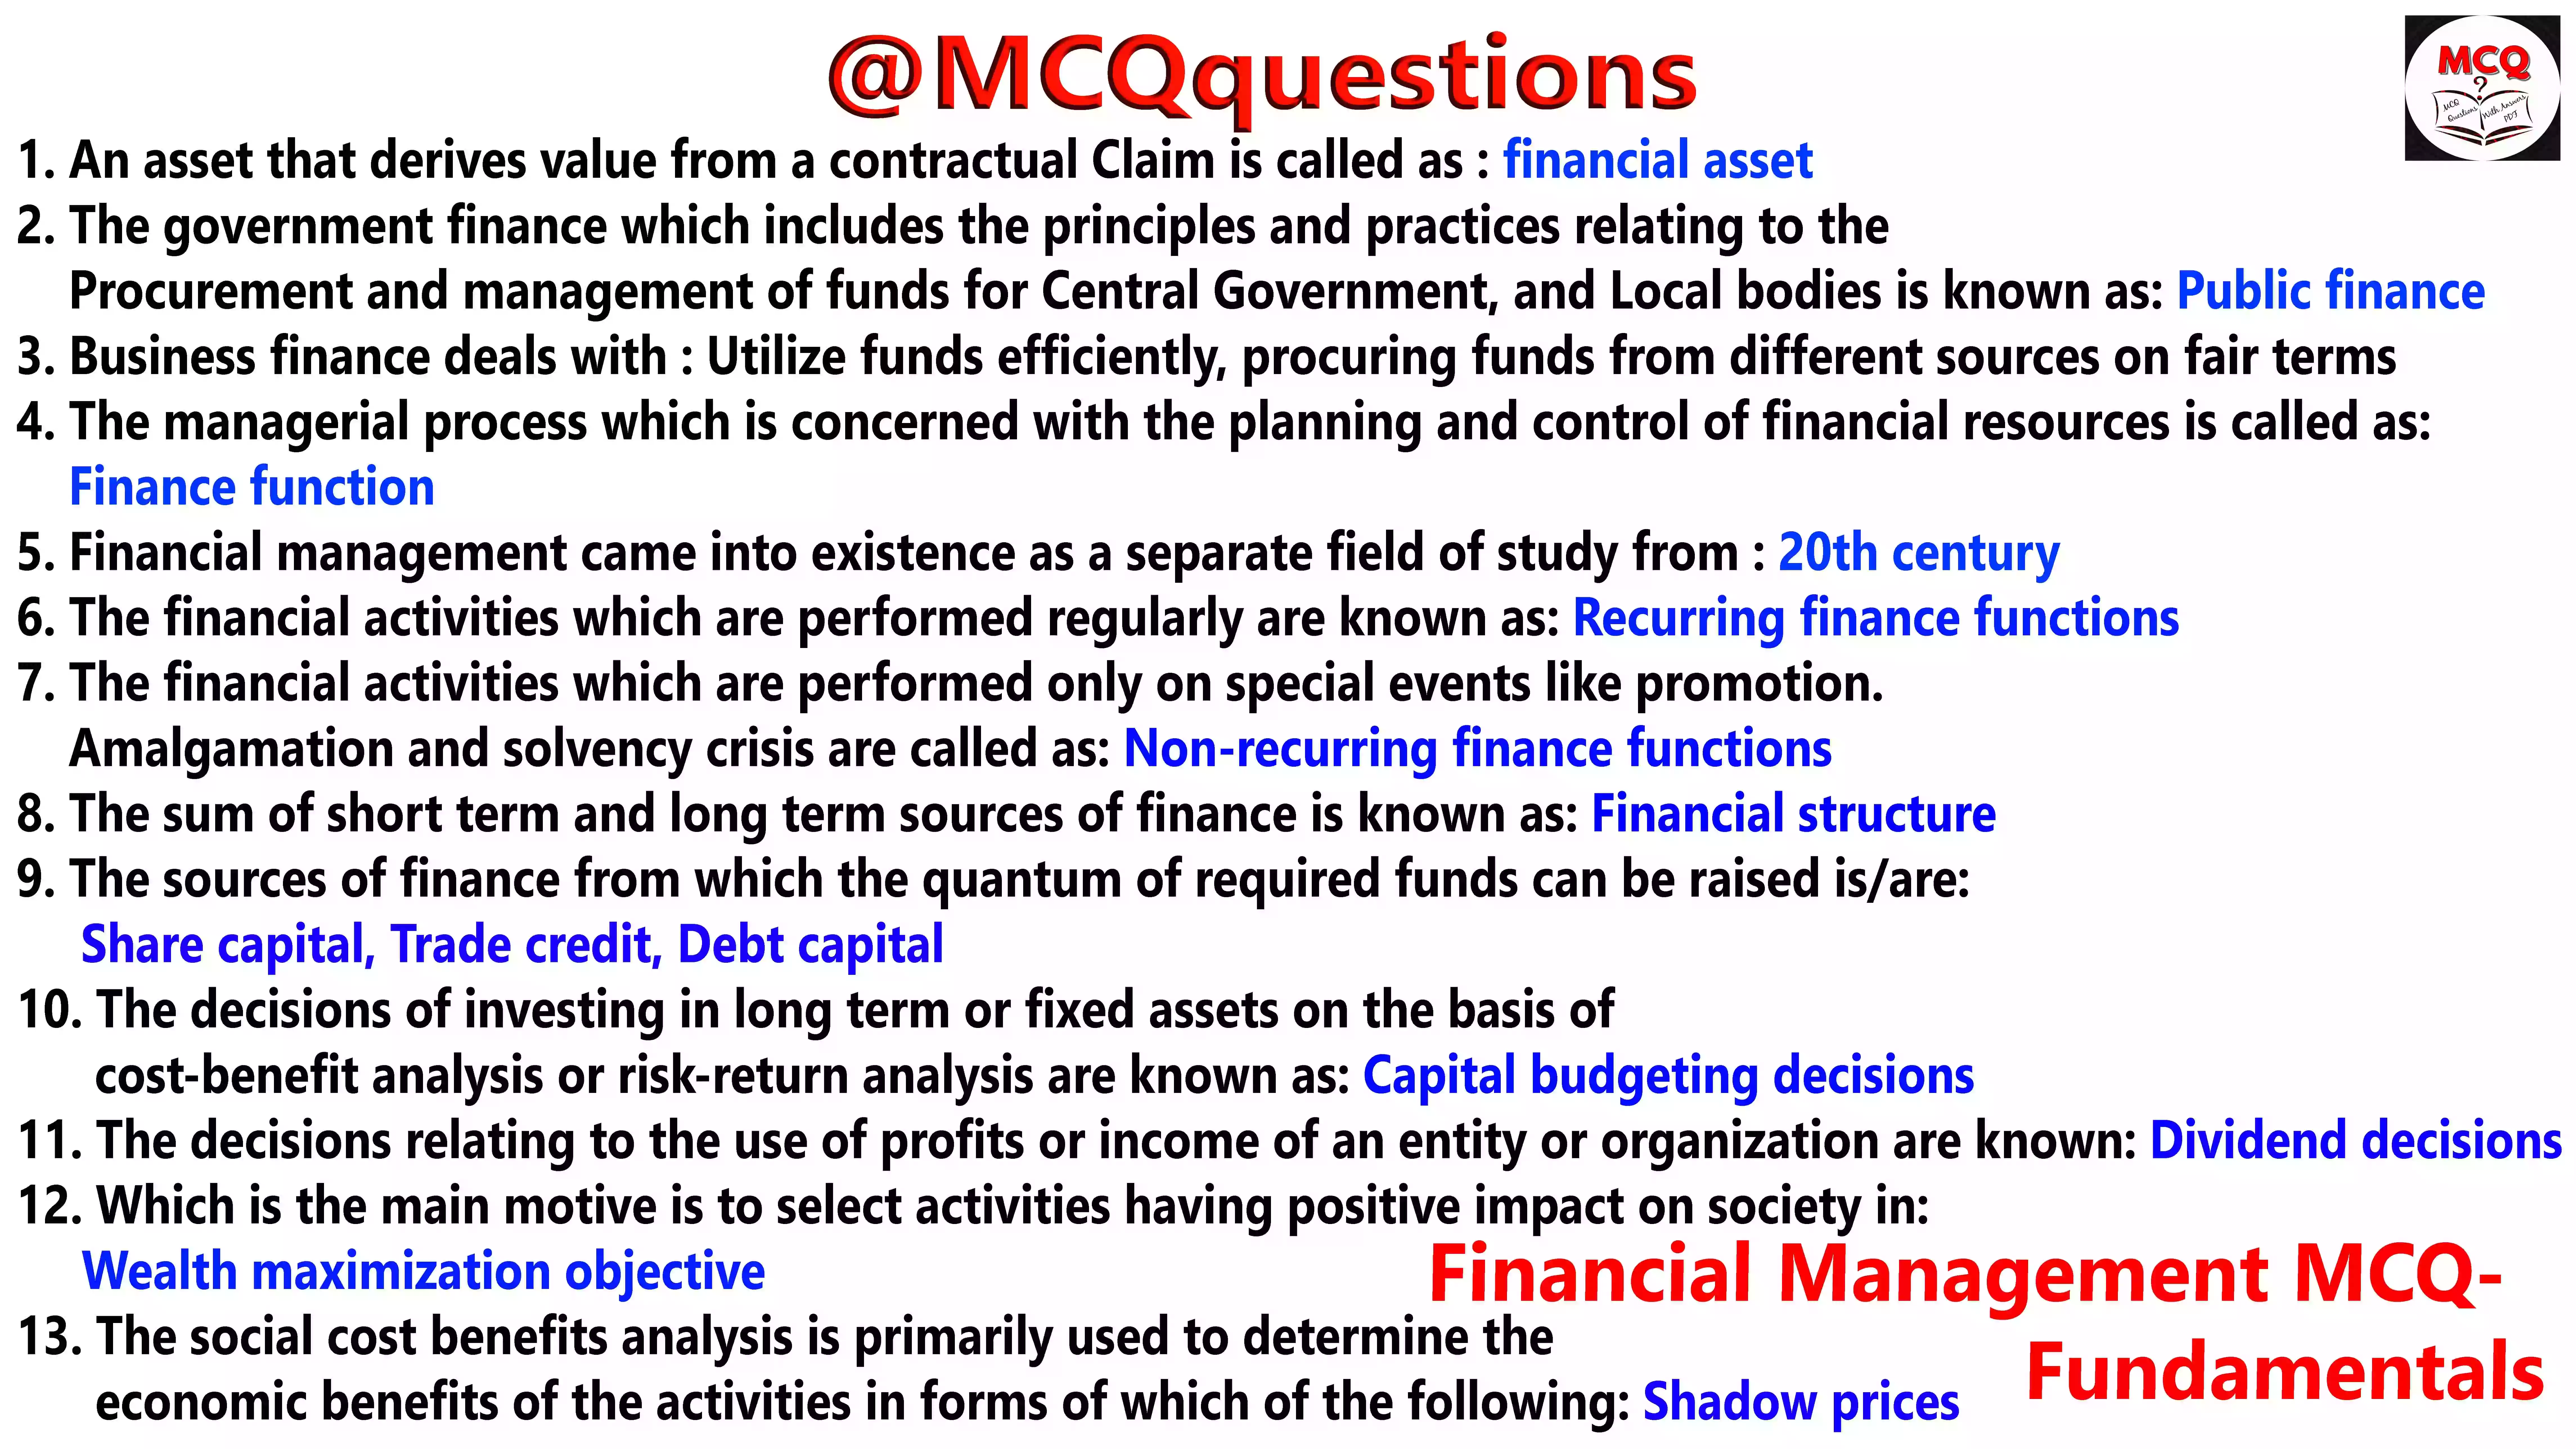 Financial Management MCQ on Fundamentals